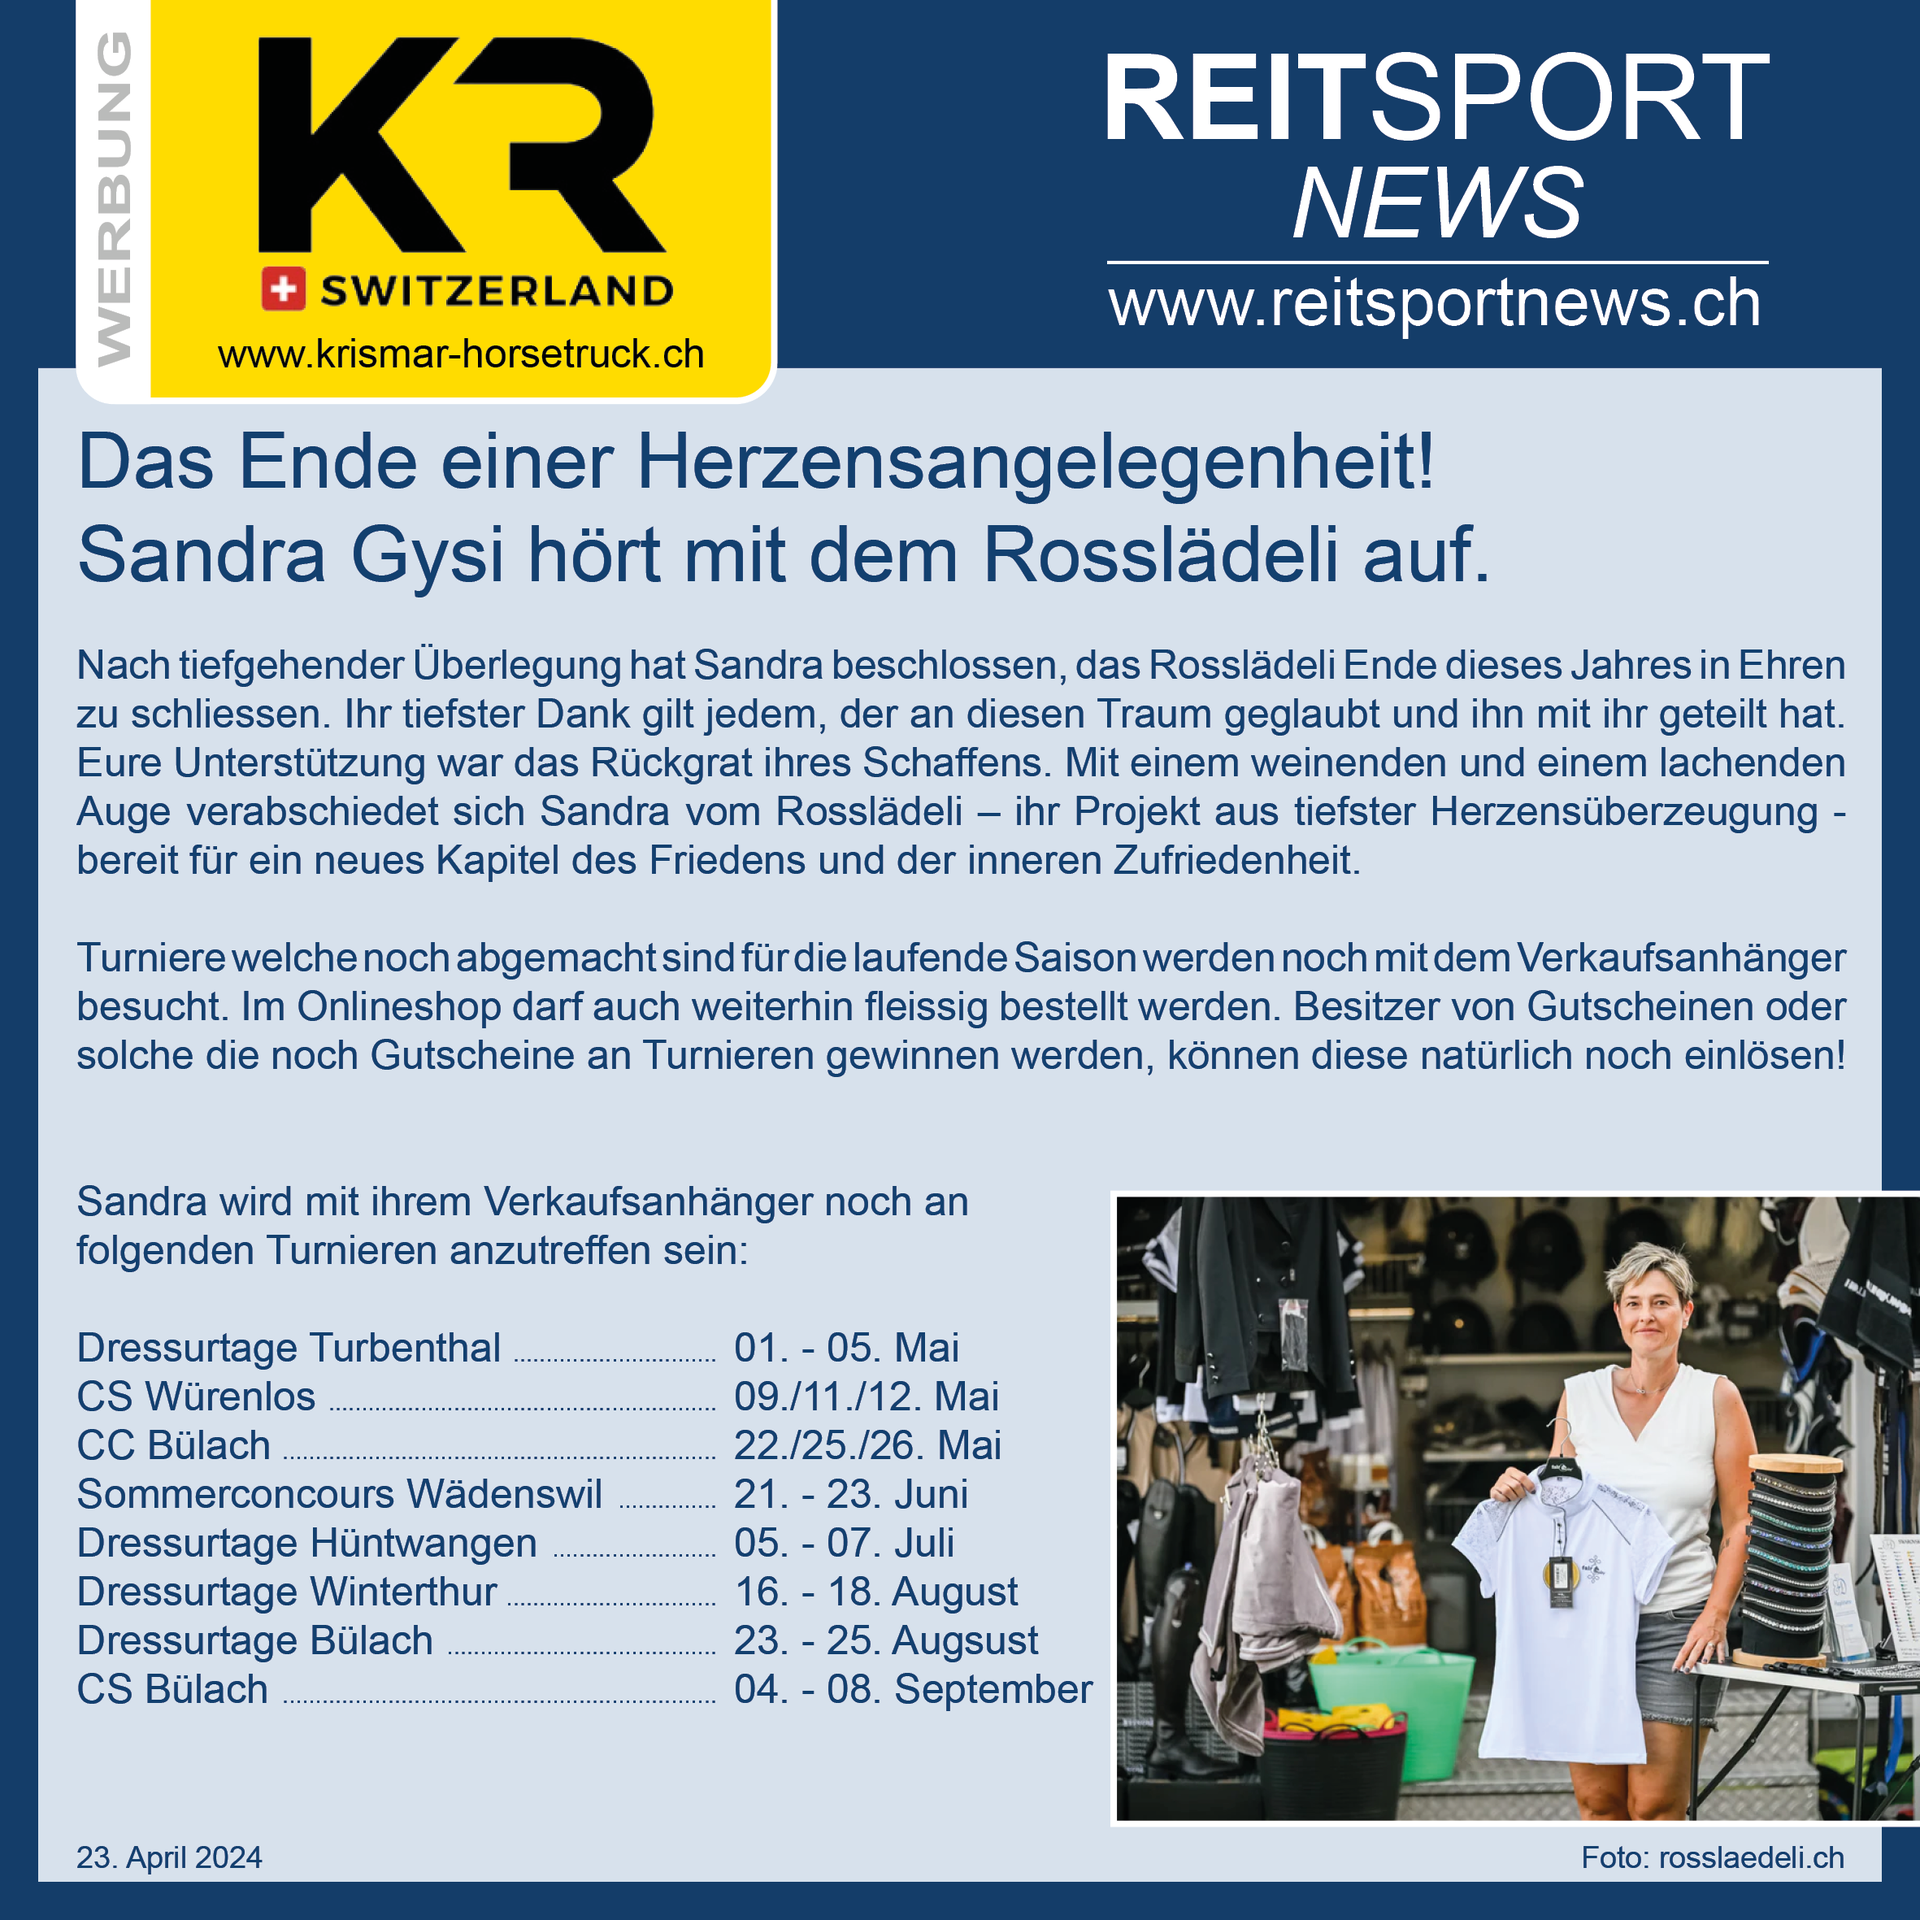 (c) Reitsportnews.ch